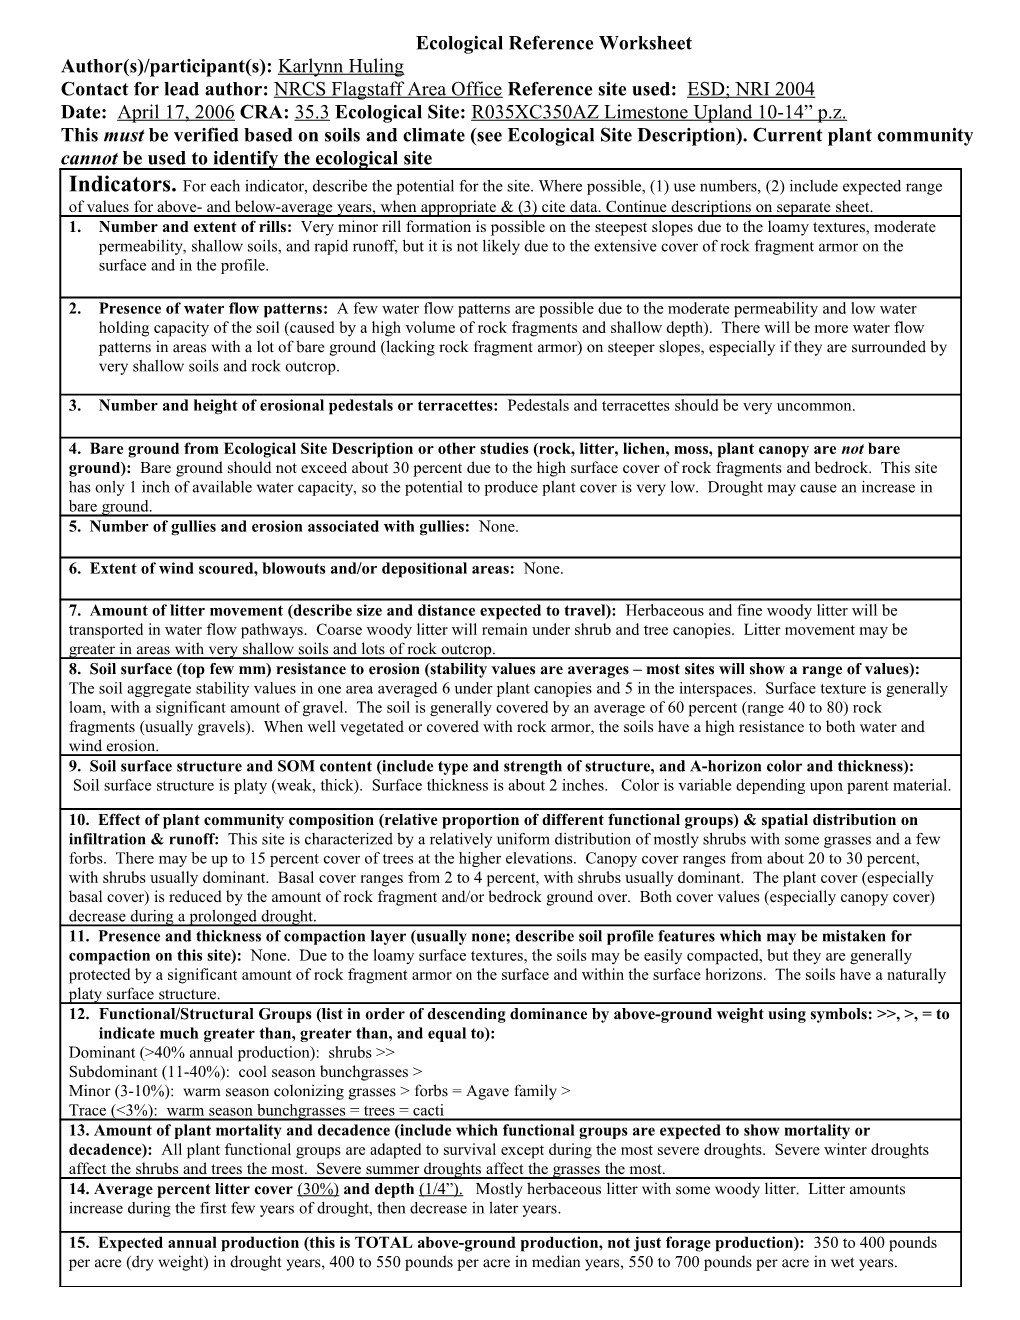 Ecological Reference Worksheet s3